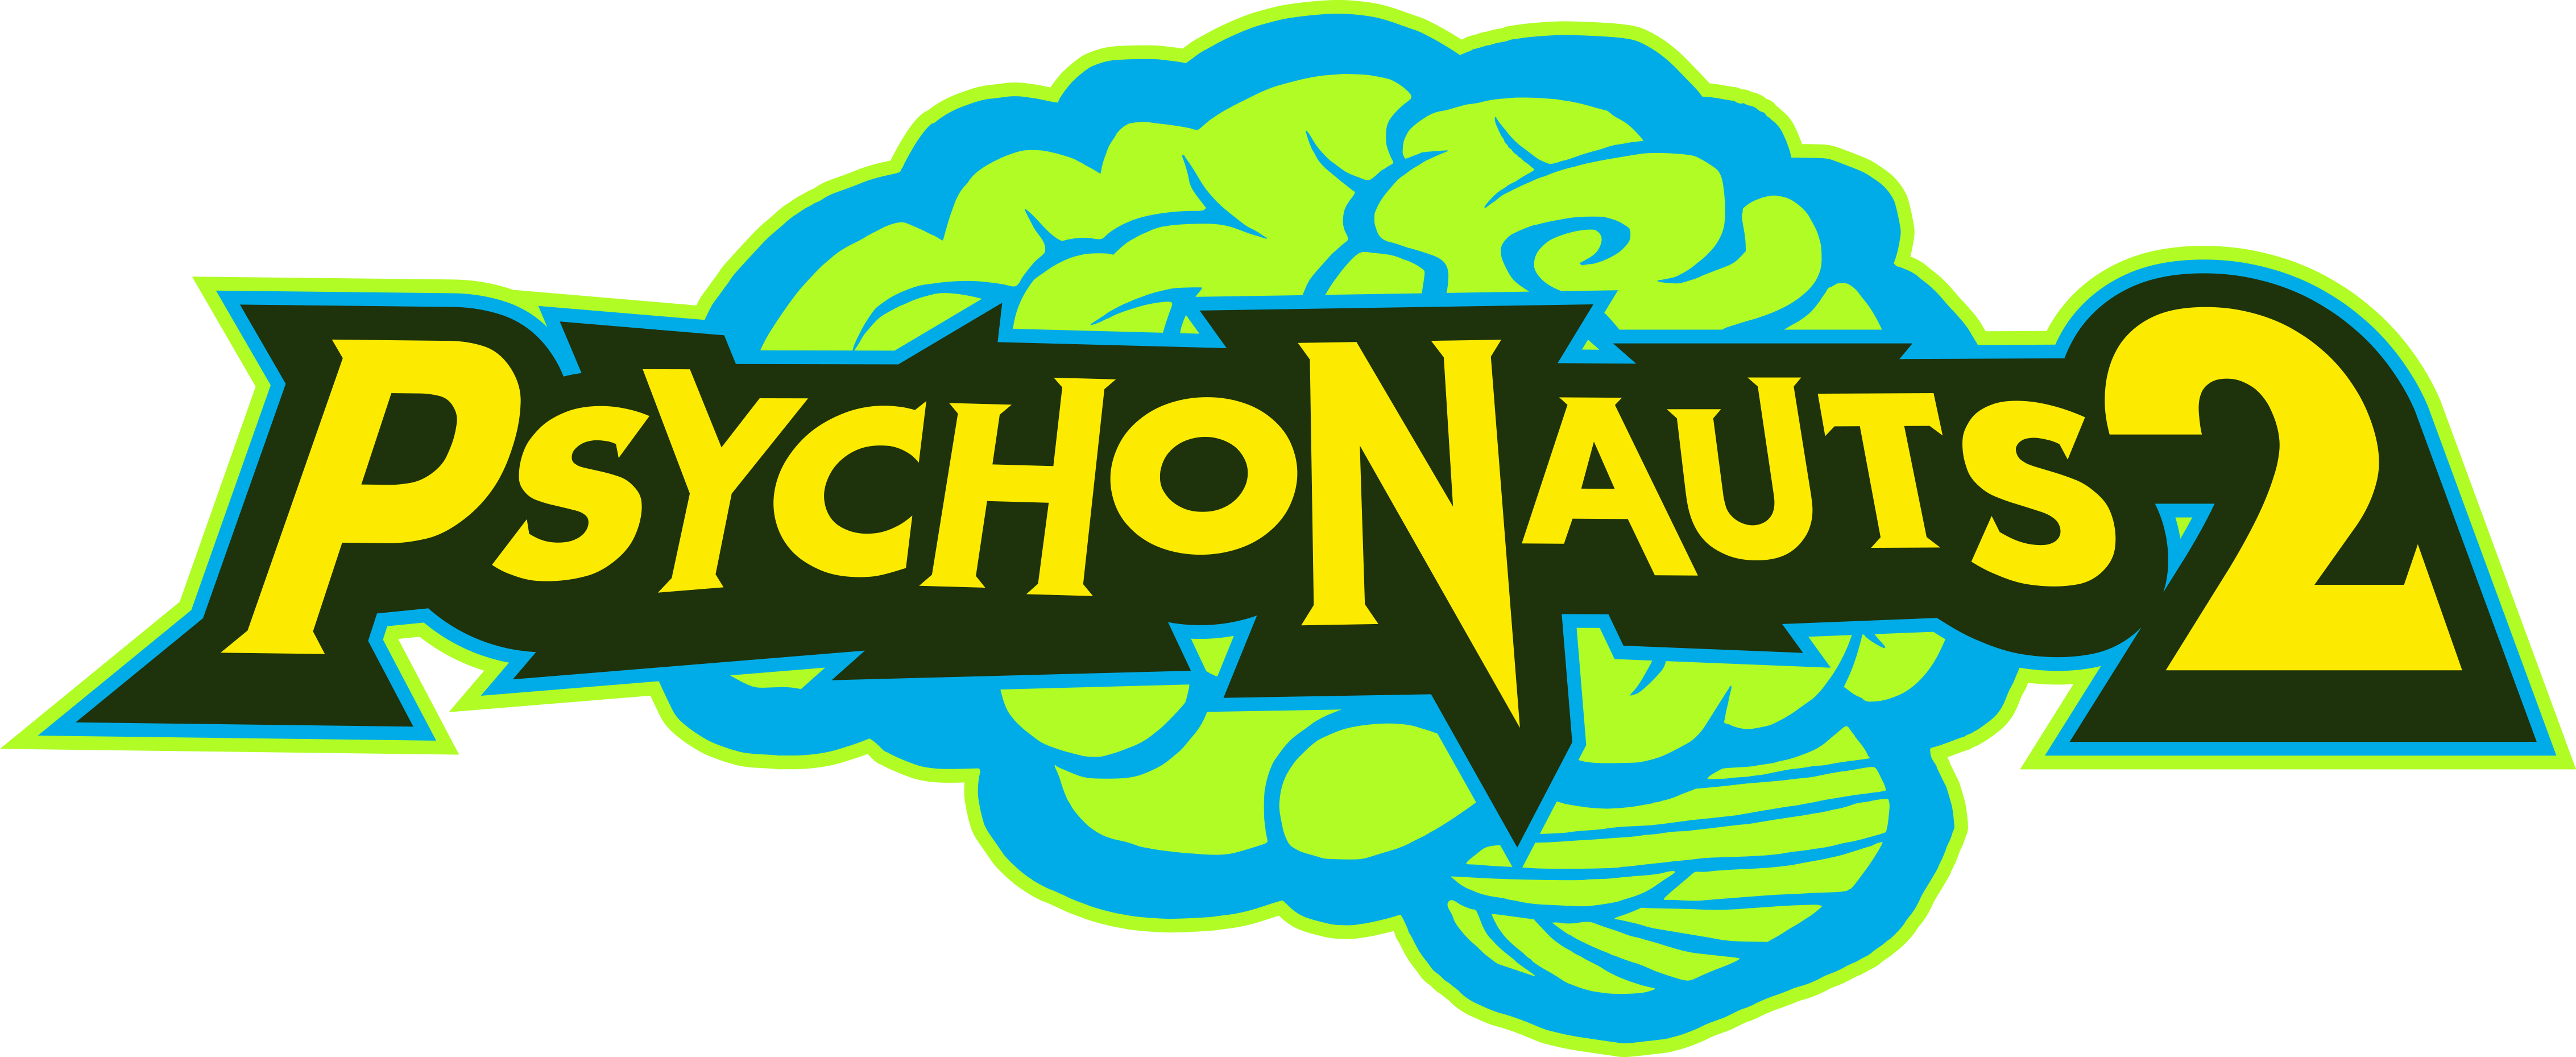 Psychonauts-2-Logo-color.png